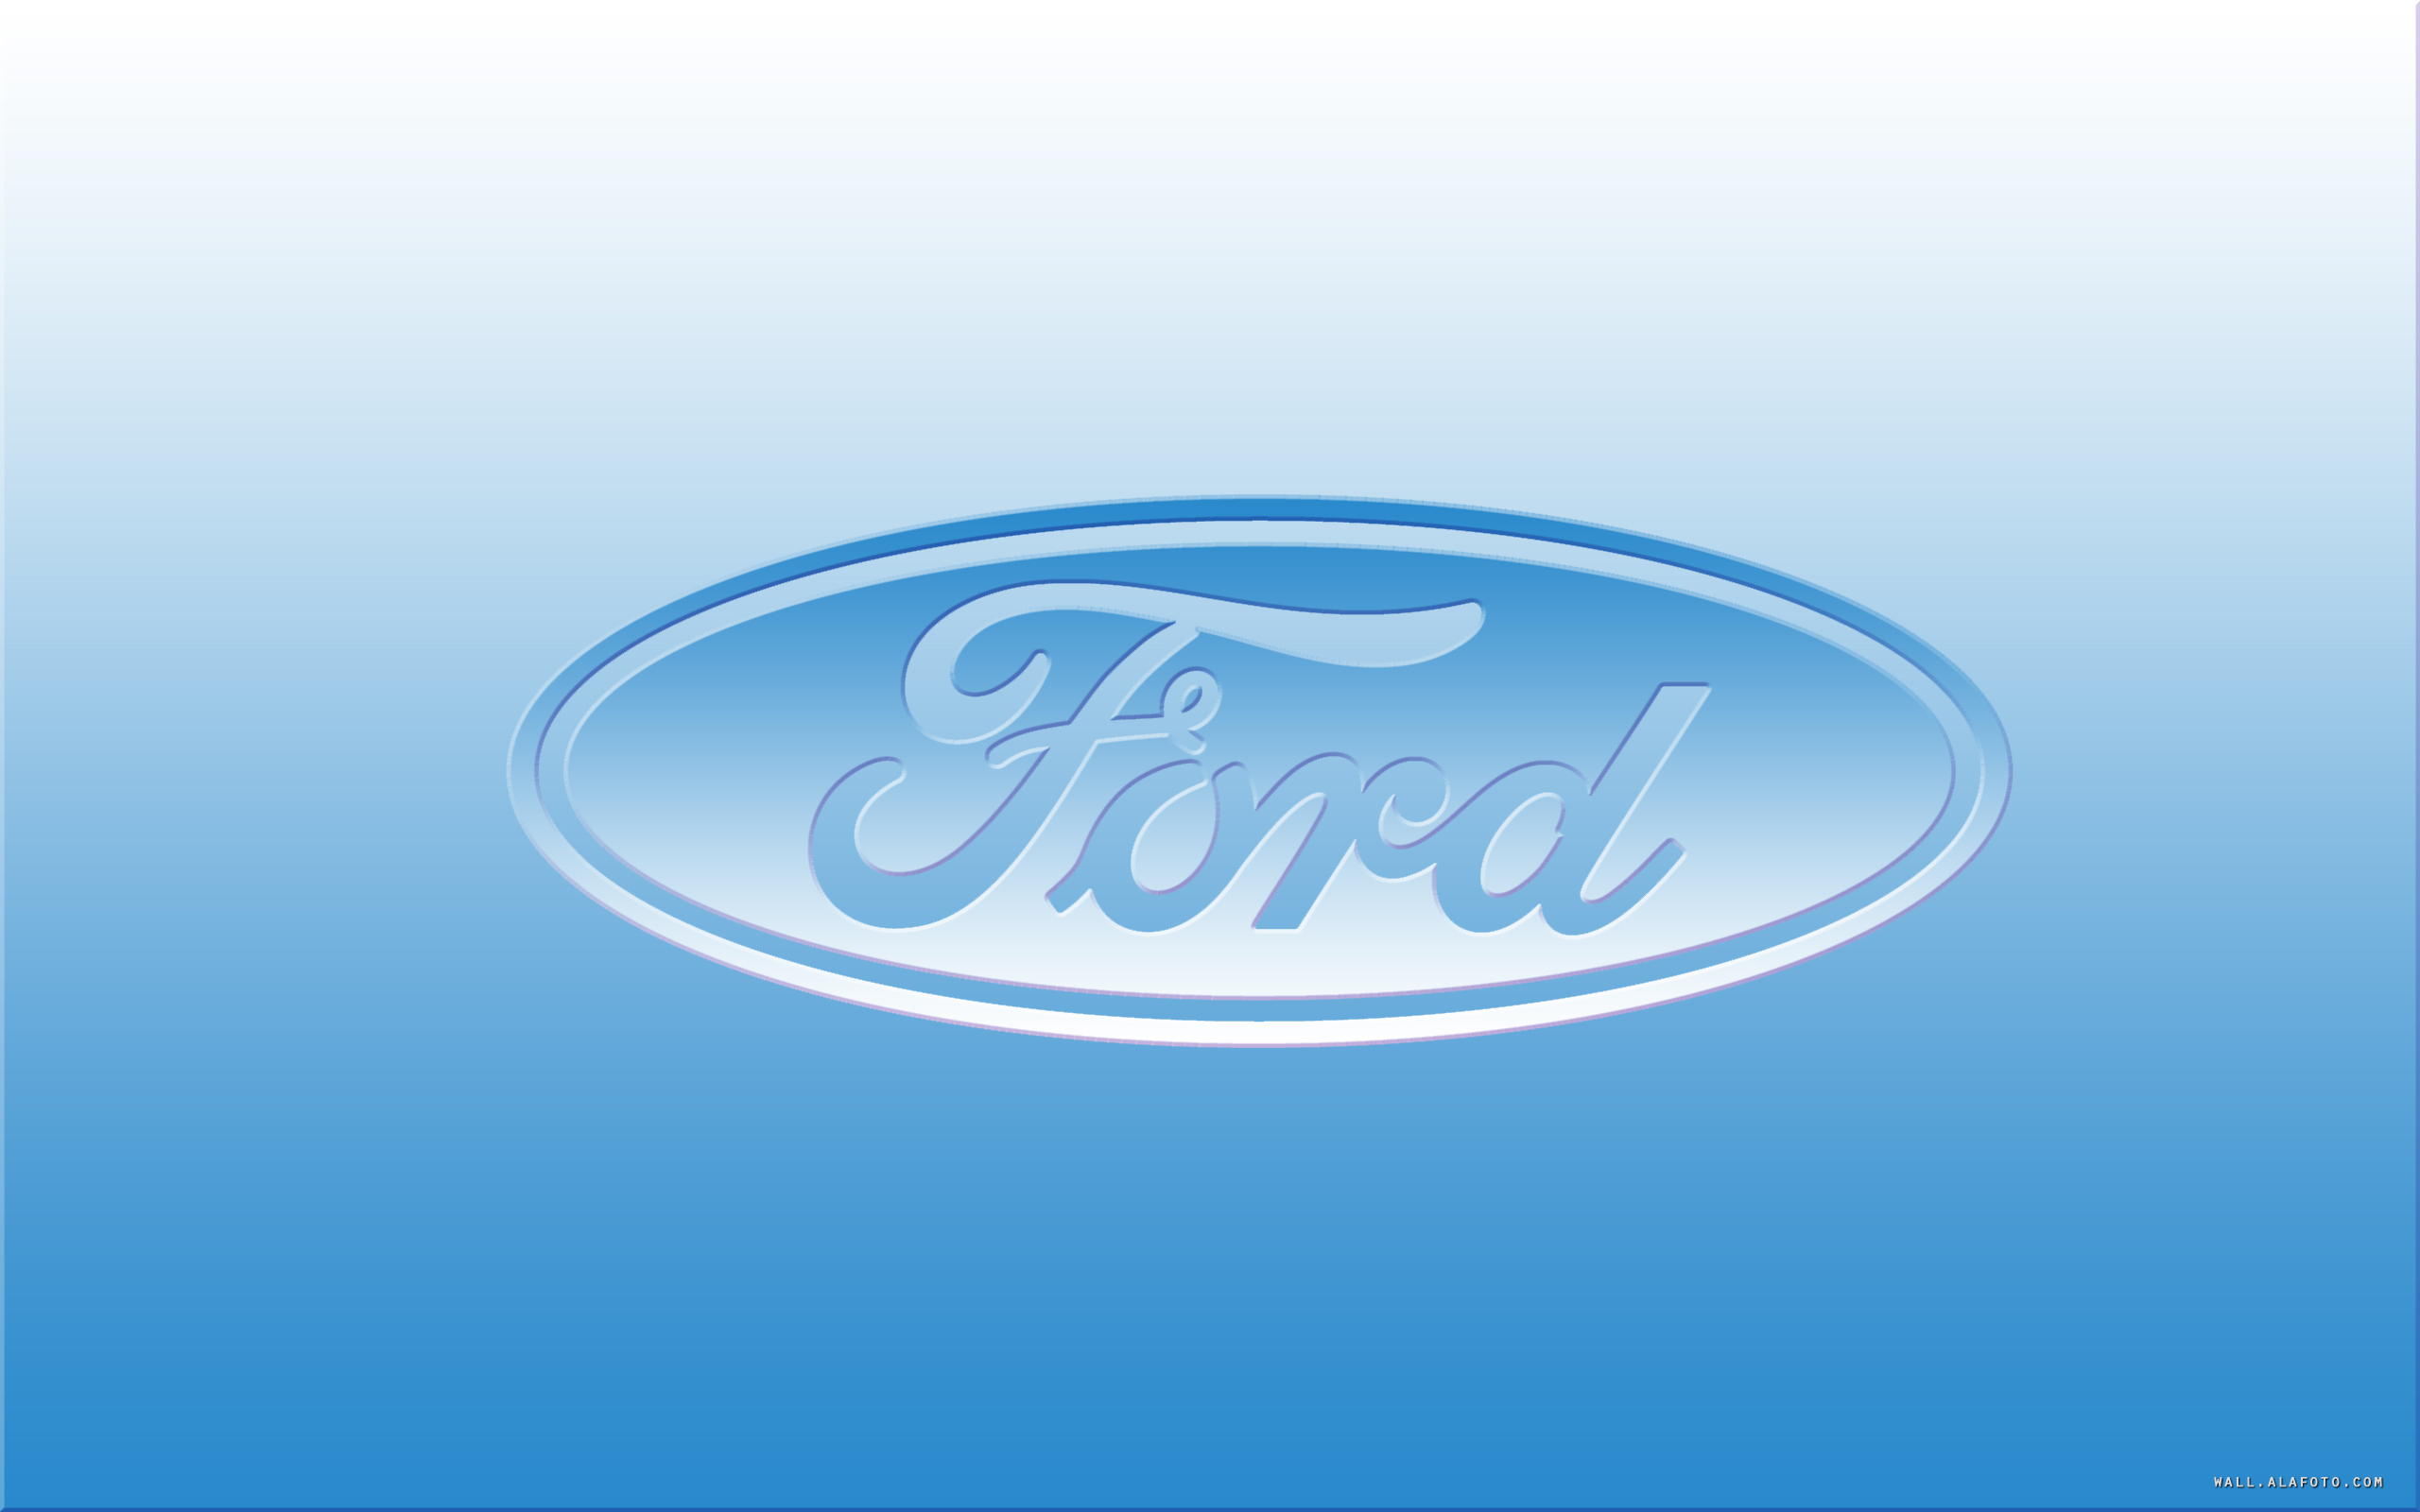 Ford Cars Logos   Ford logo 101   Alafoto Wallpapers 2560x1600